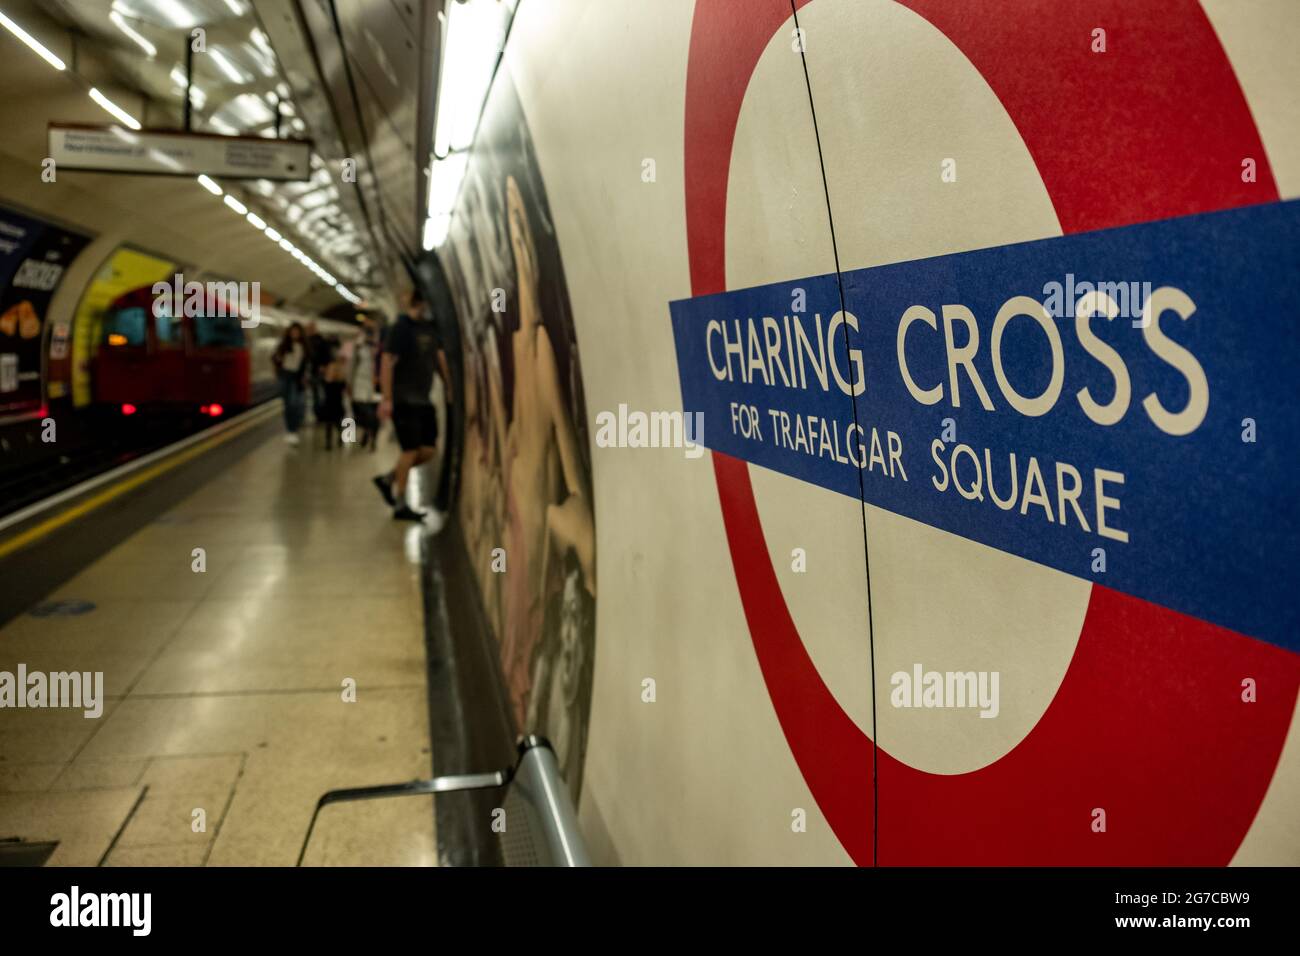 London- July, 2021: Charing Cross London underground station platform. Stock Photo